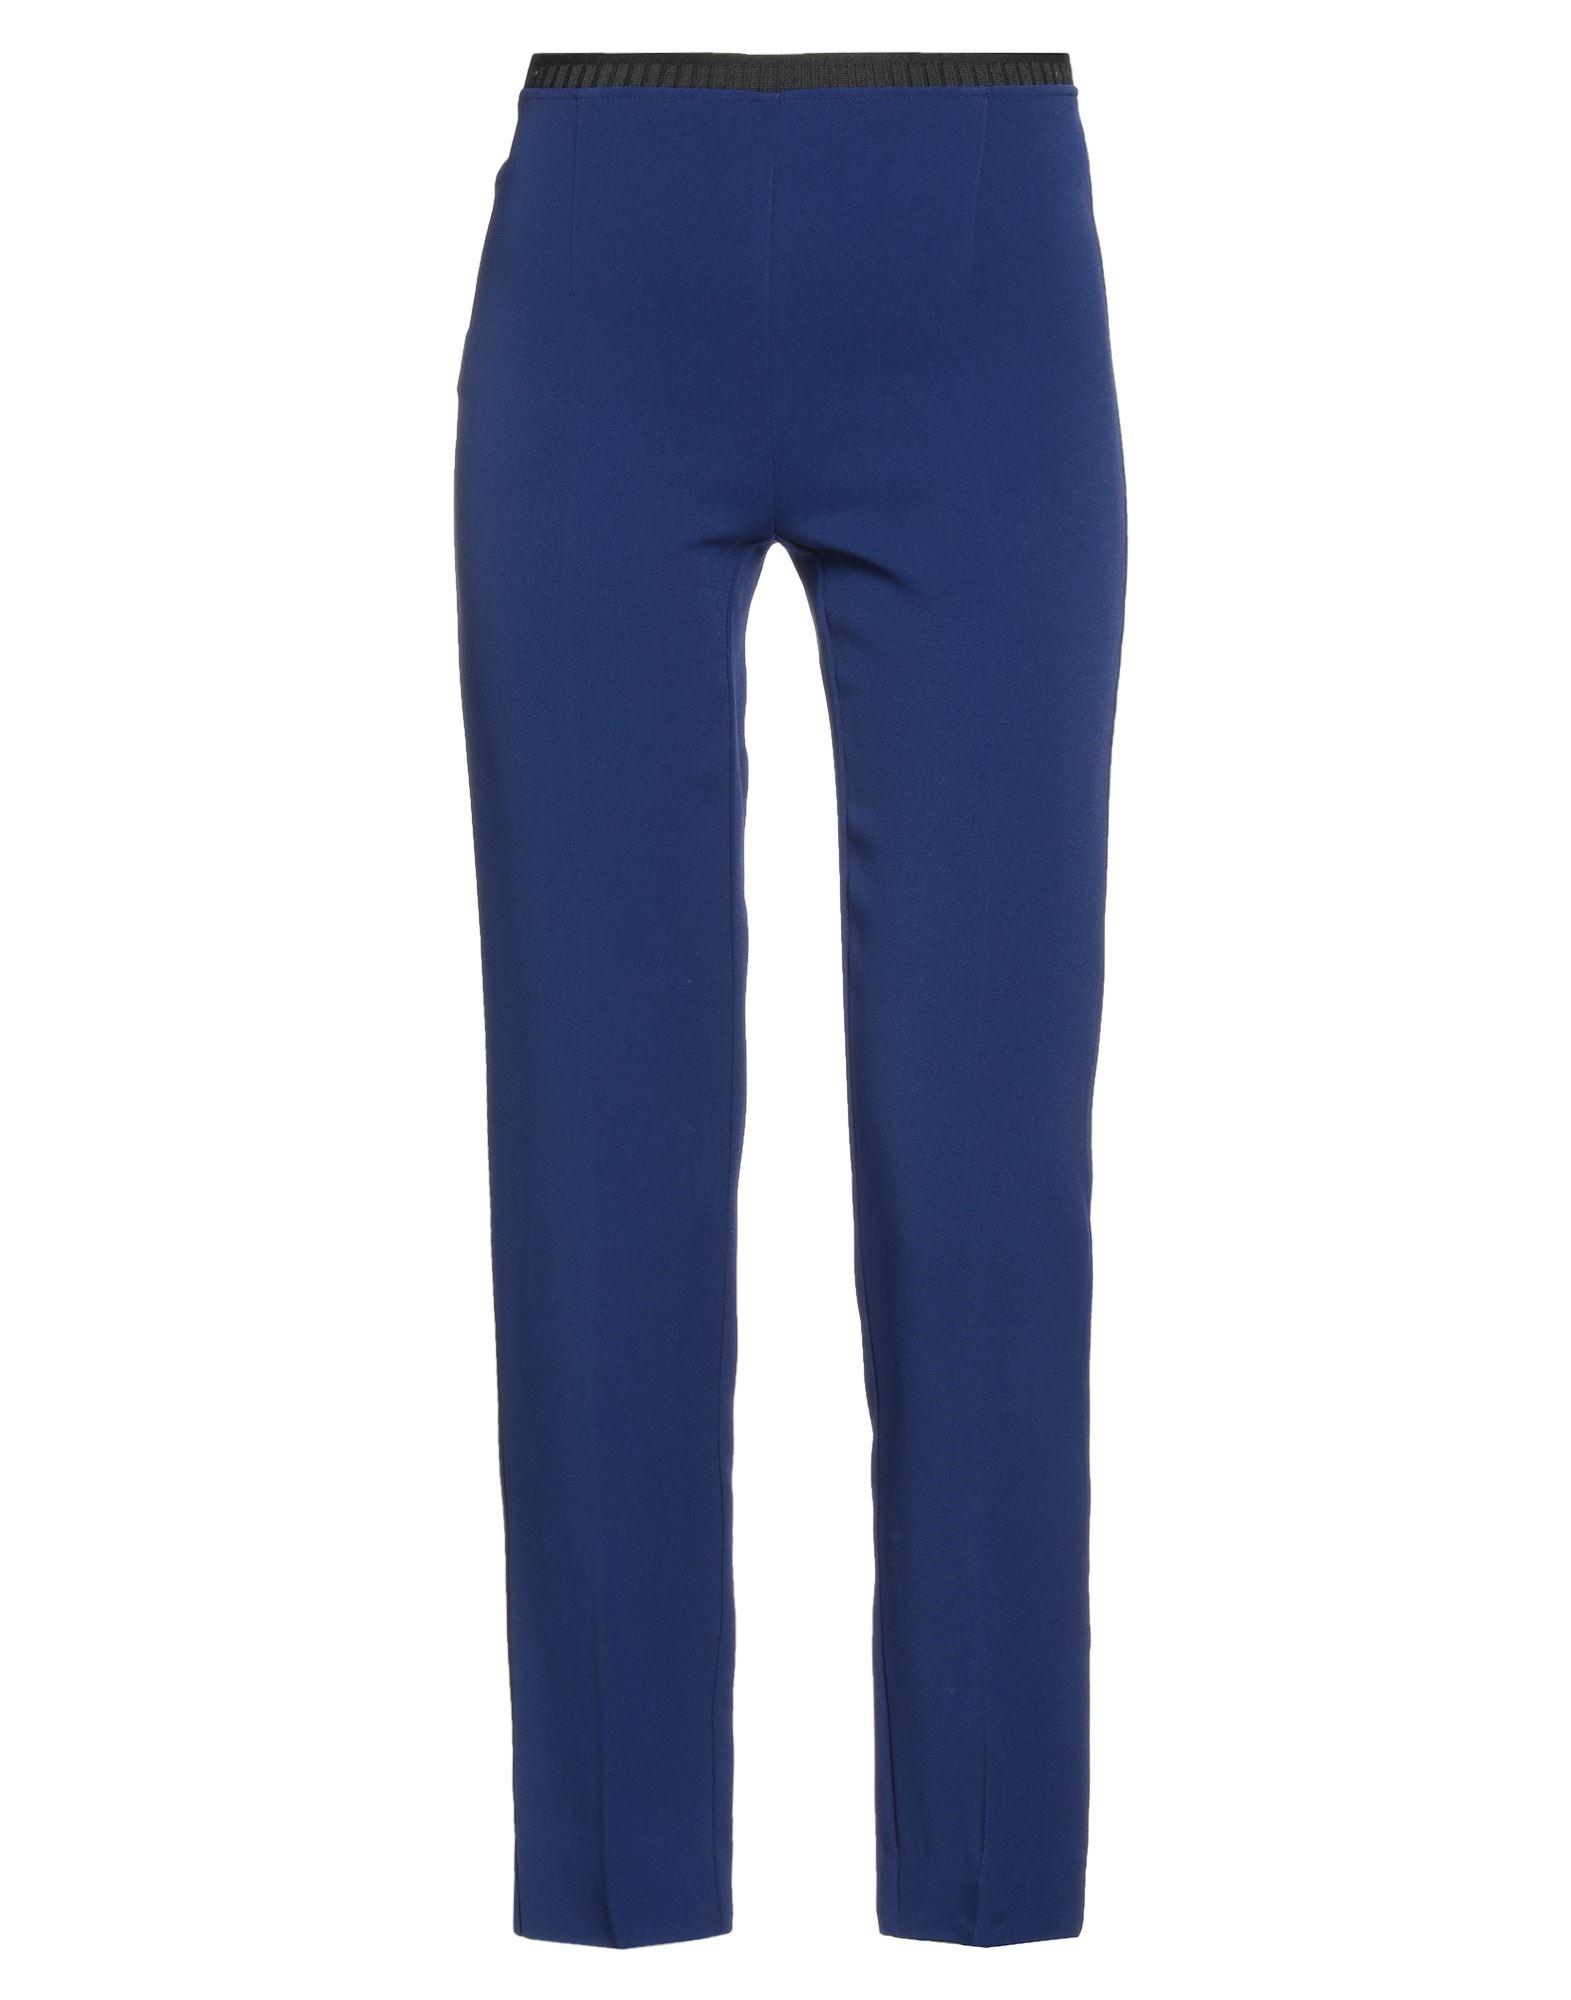 Rose & Lini Woman Pants Bright Blue Size 8 Acetate, Viscose, Lycra